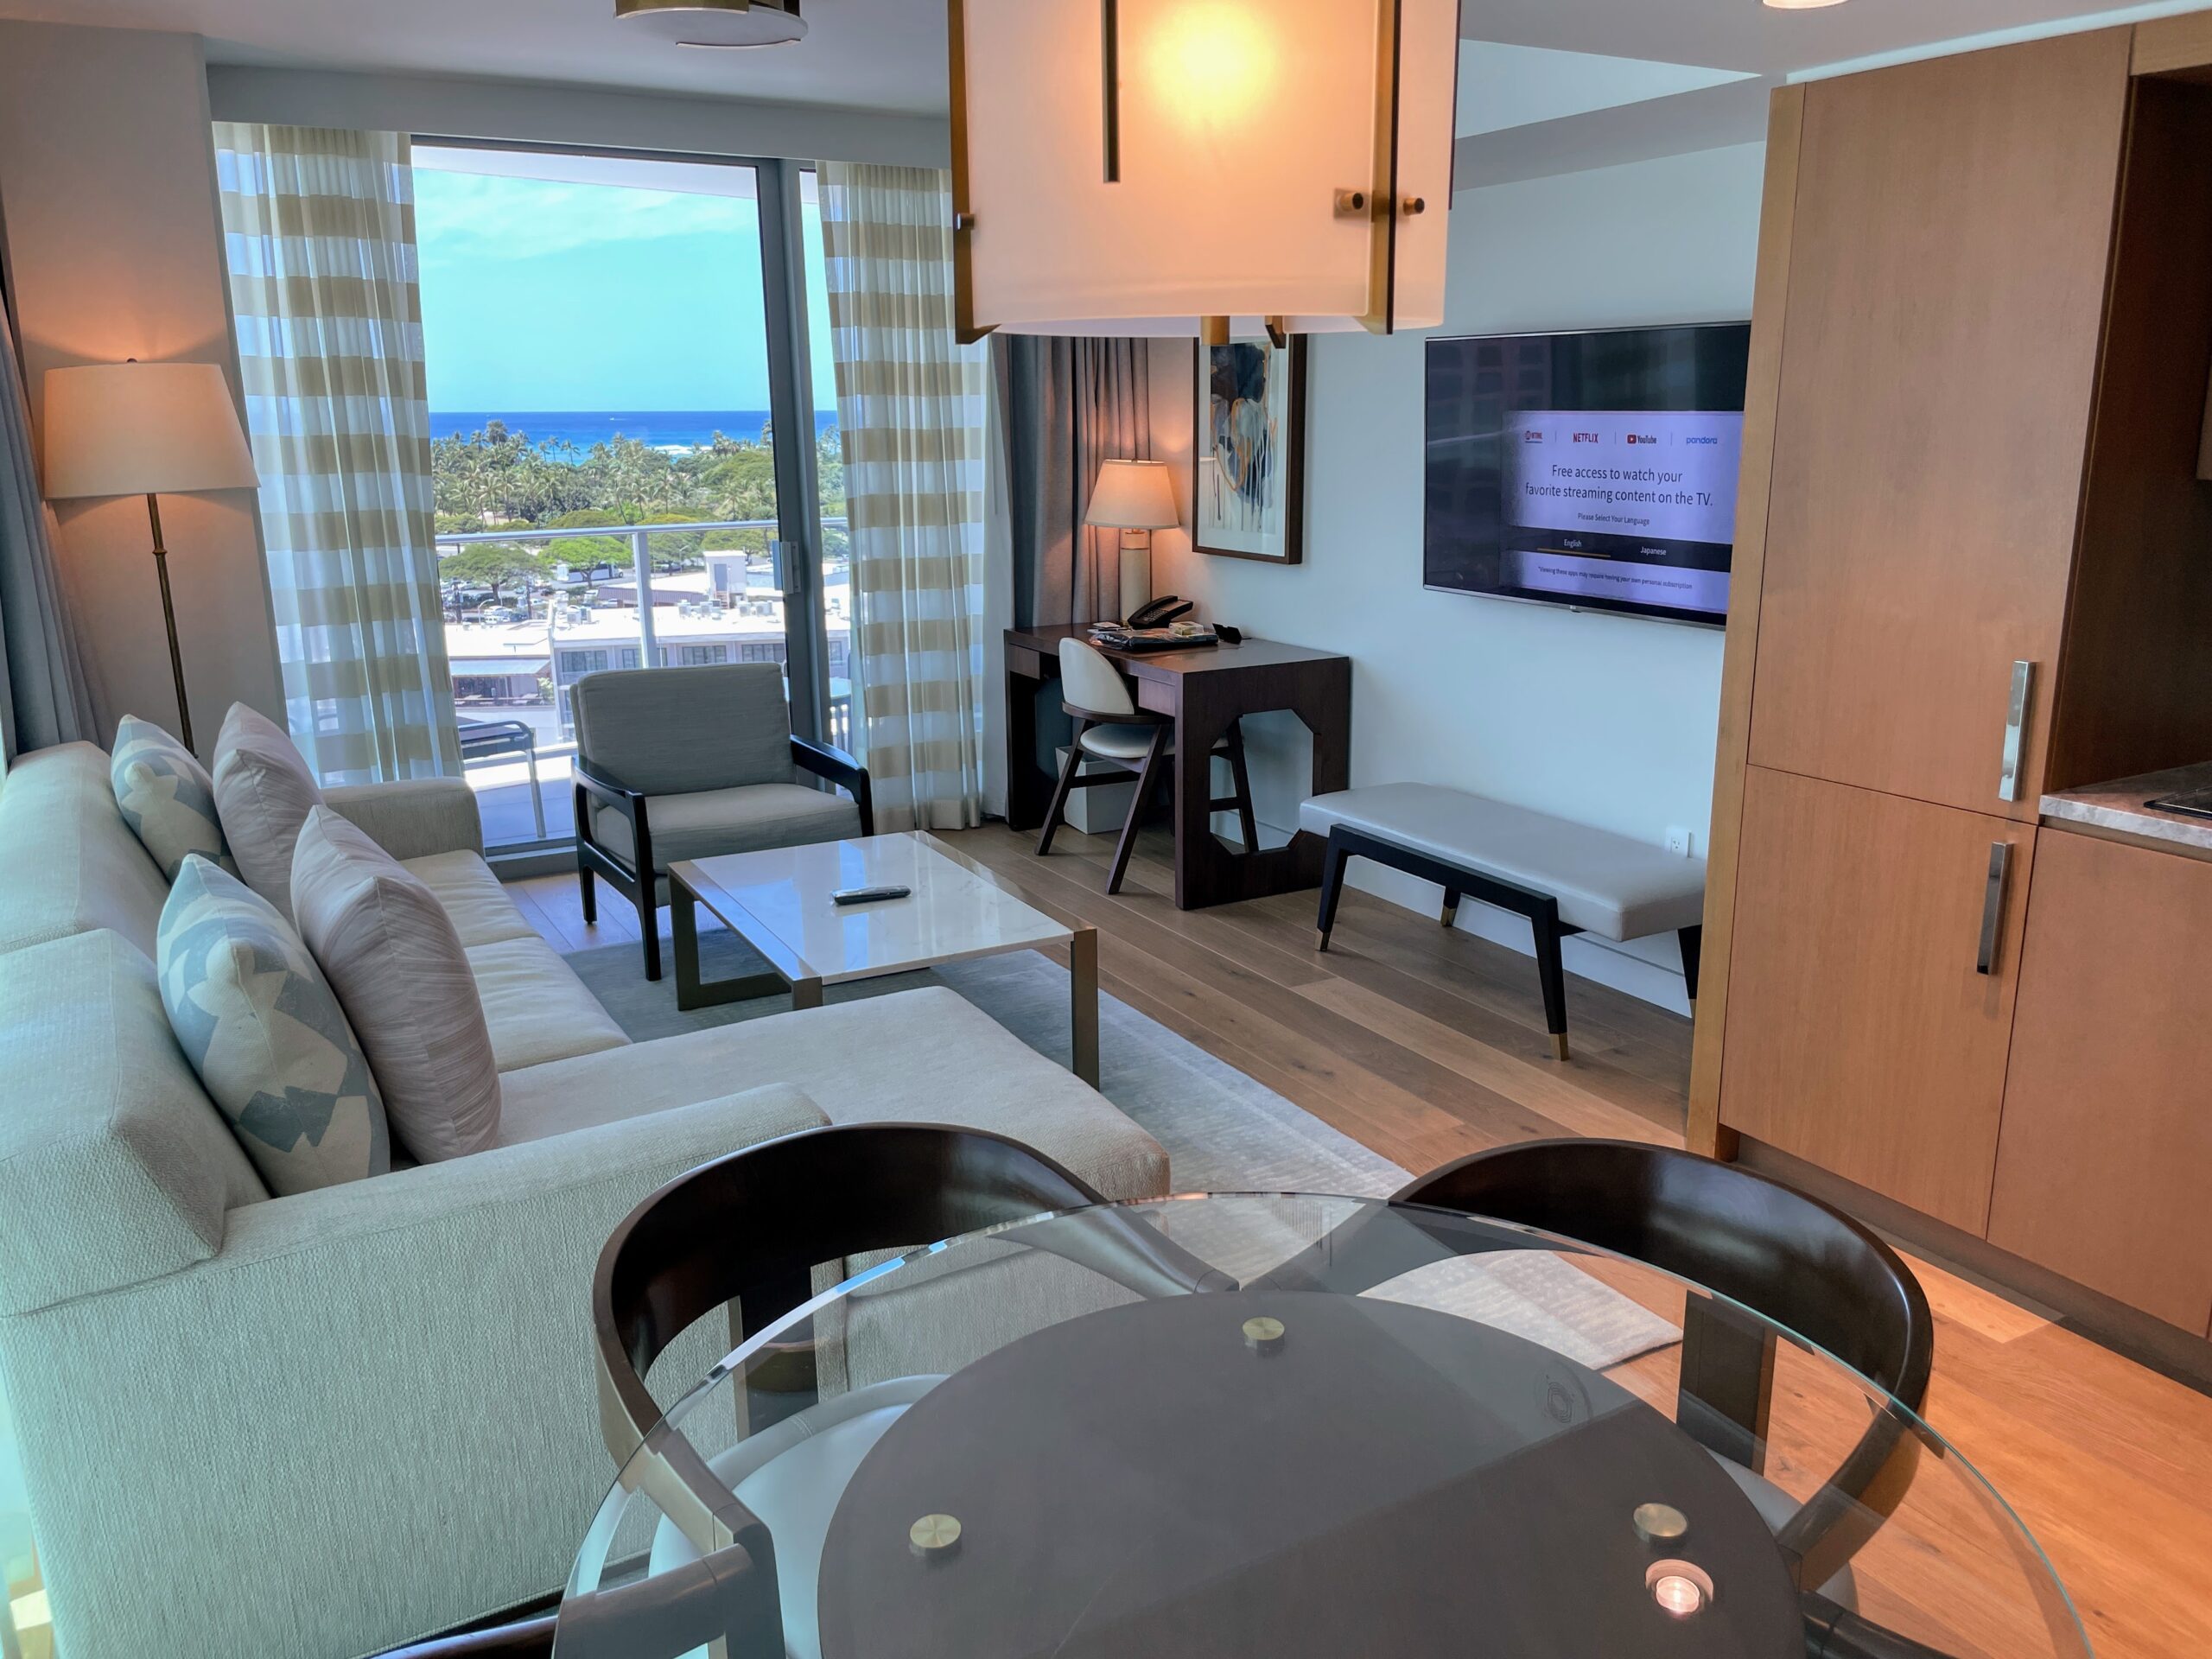 Review & Video: The Ritz-Carlton Waikiki Beach, Luxurious Residences & Hotel